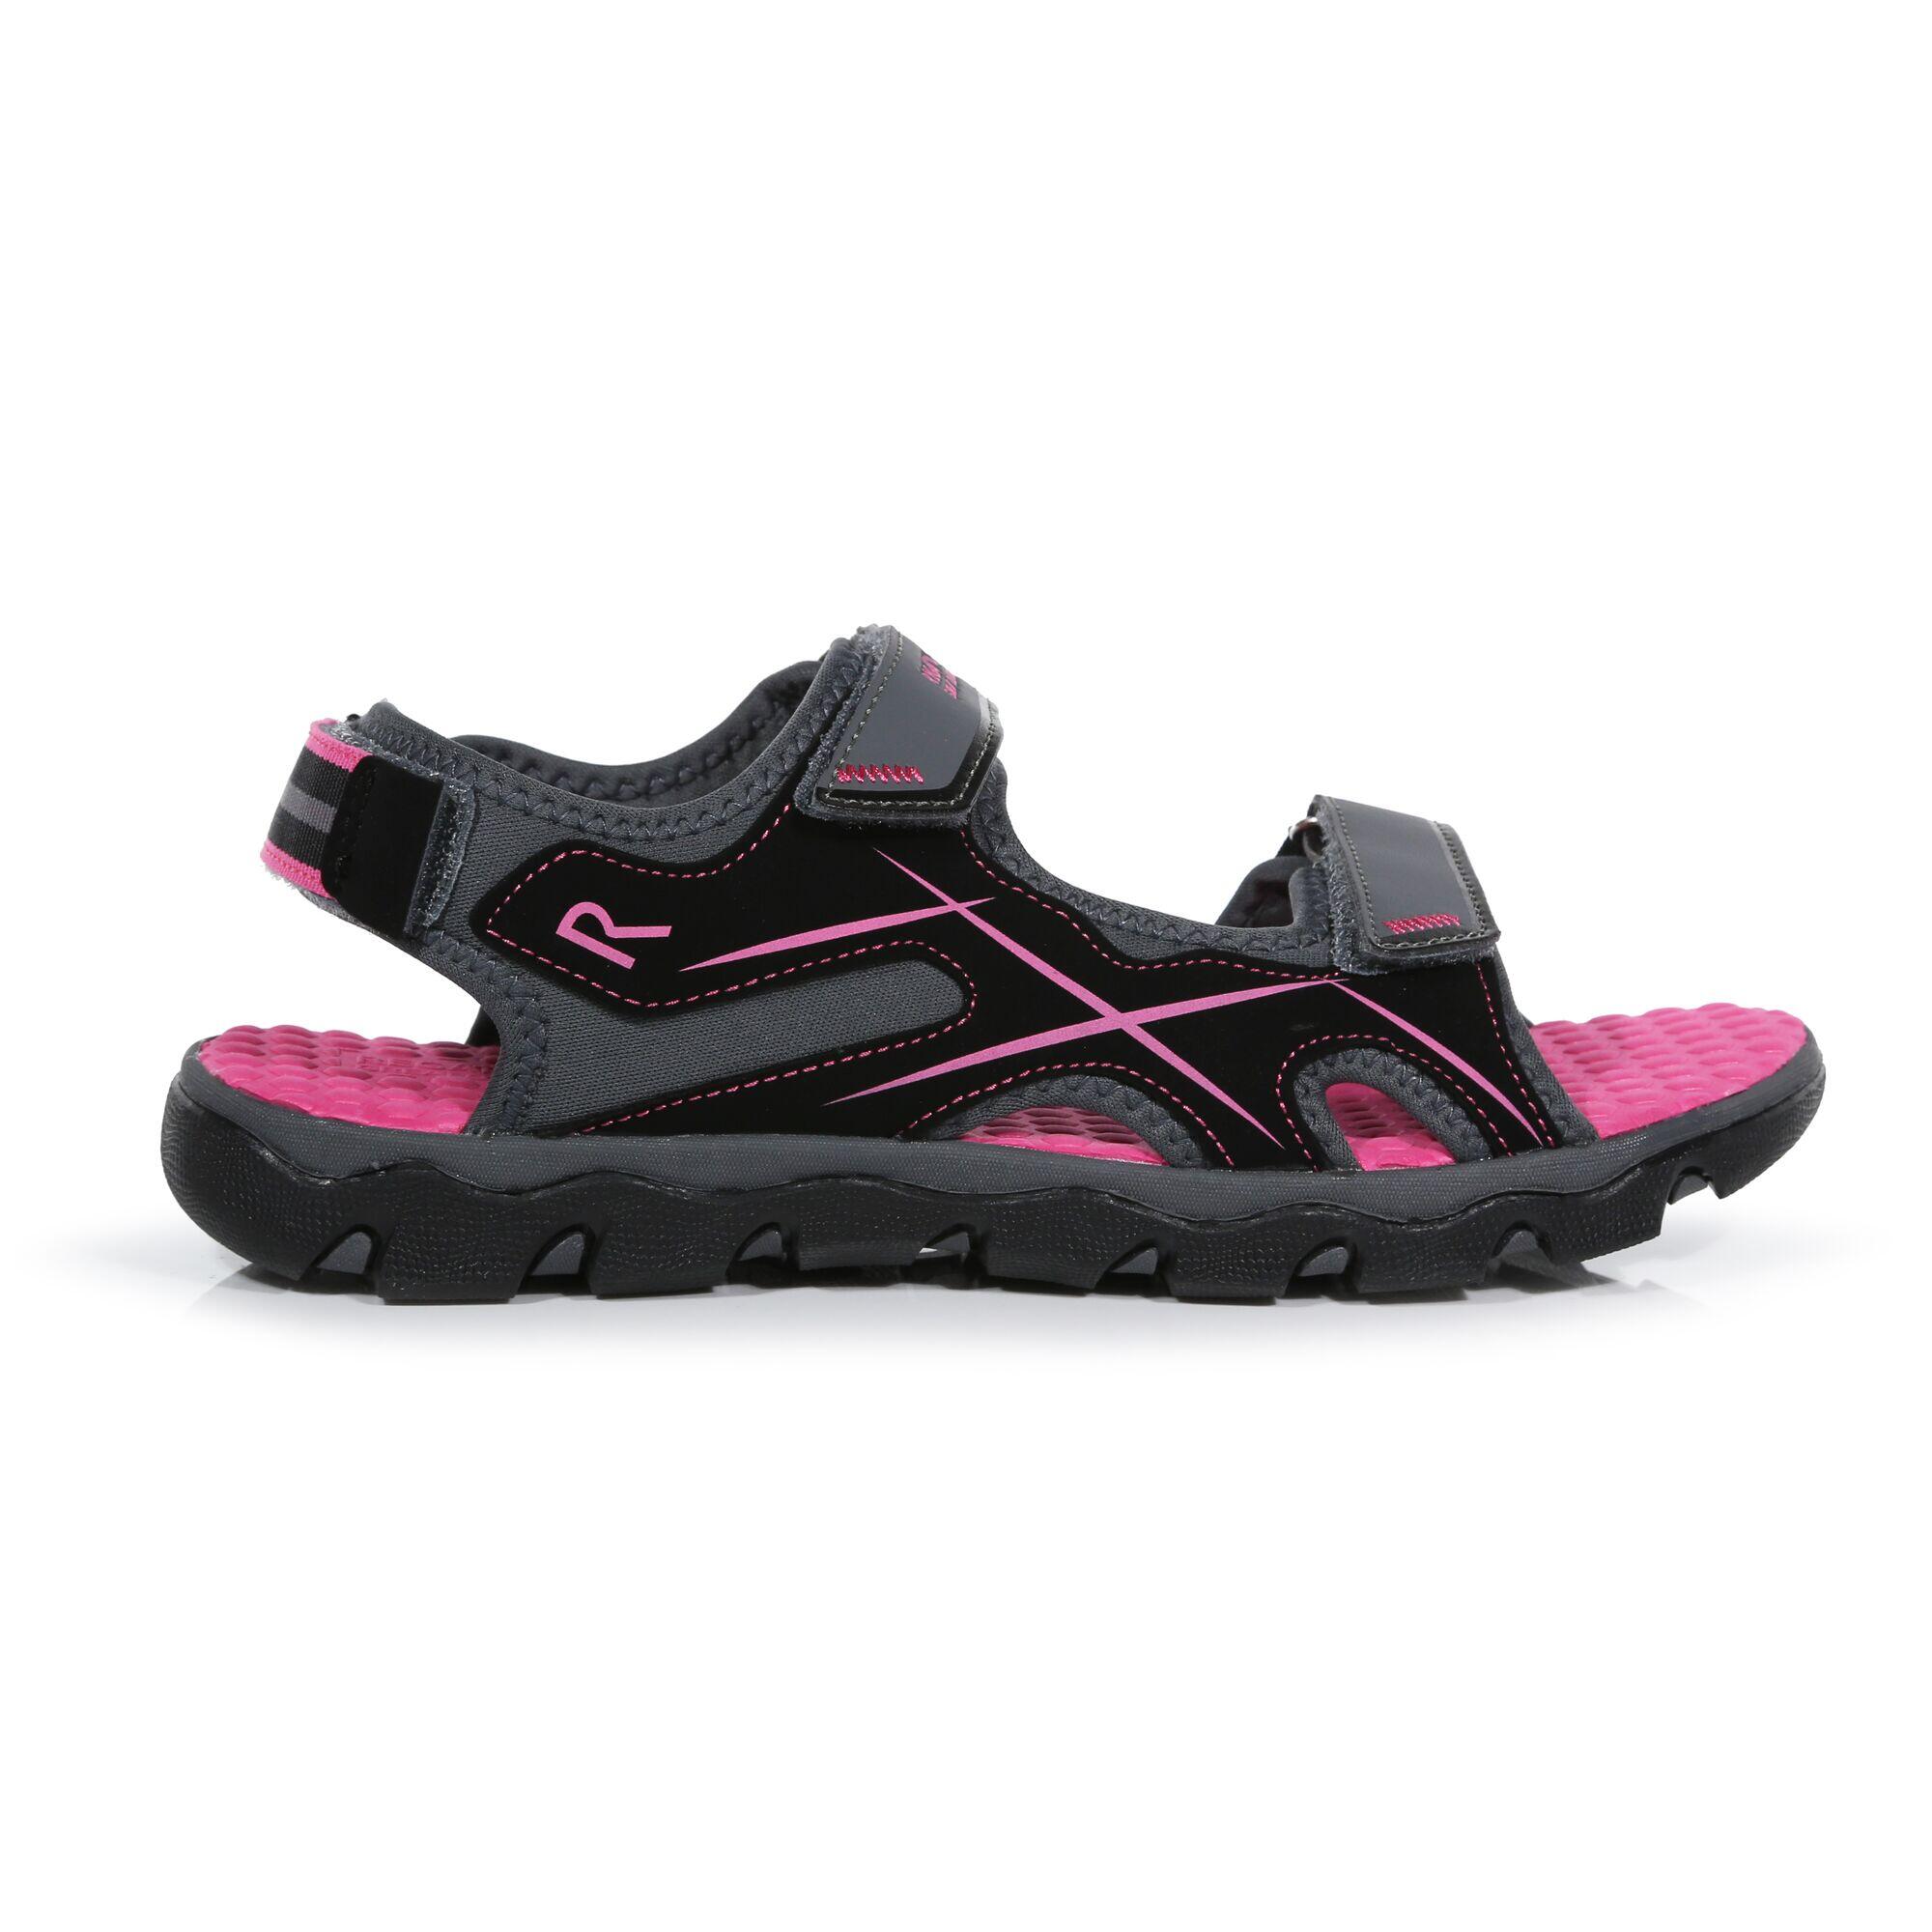 REGATTA Kota Drift Junior Kids Walking Sandals - Granite Grey / Pink